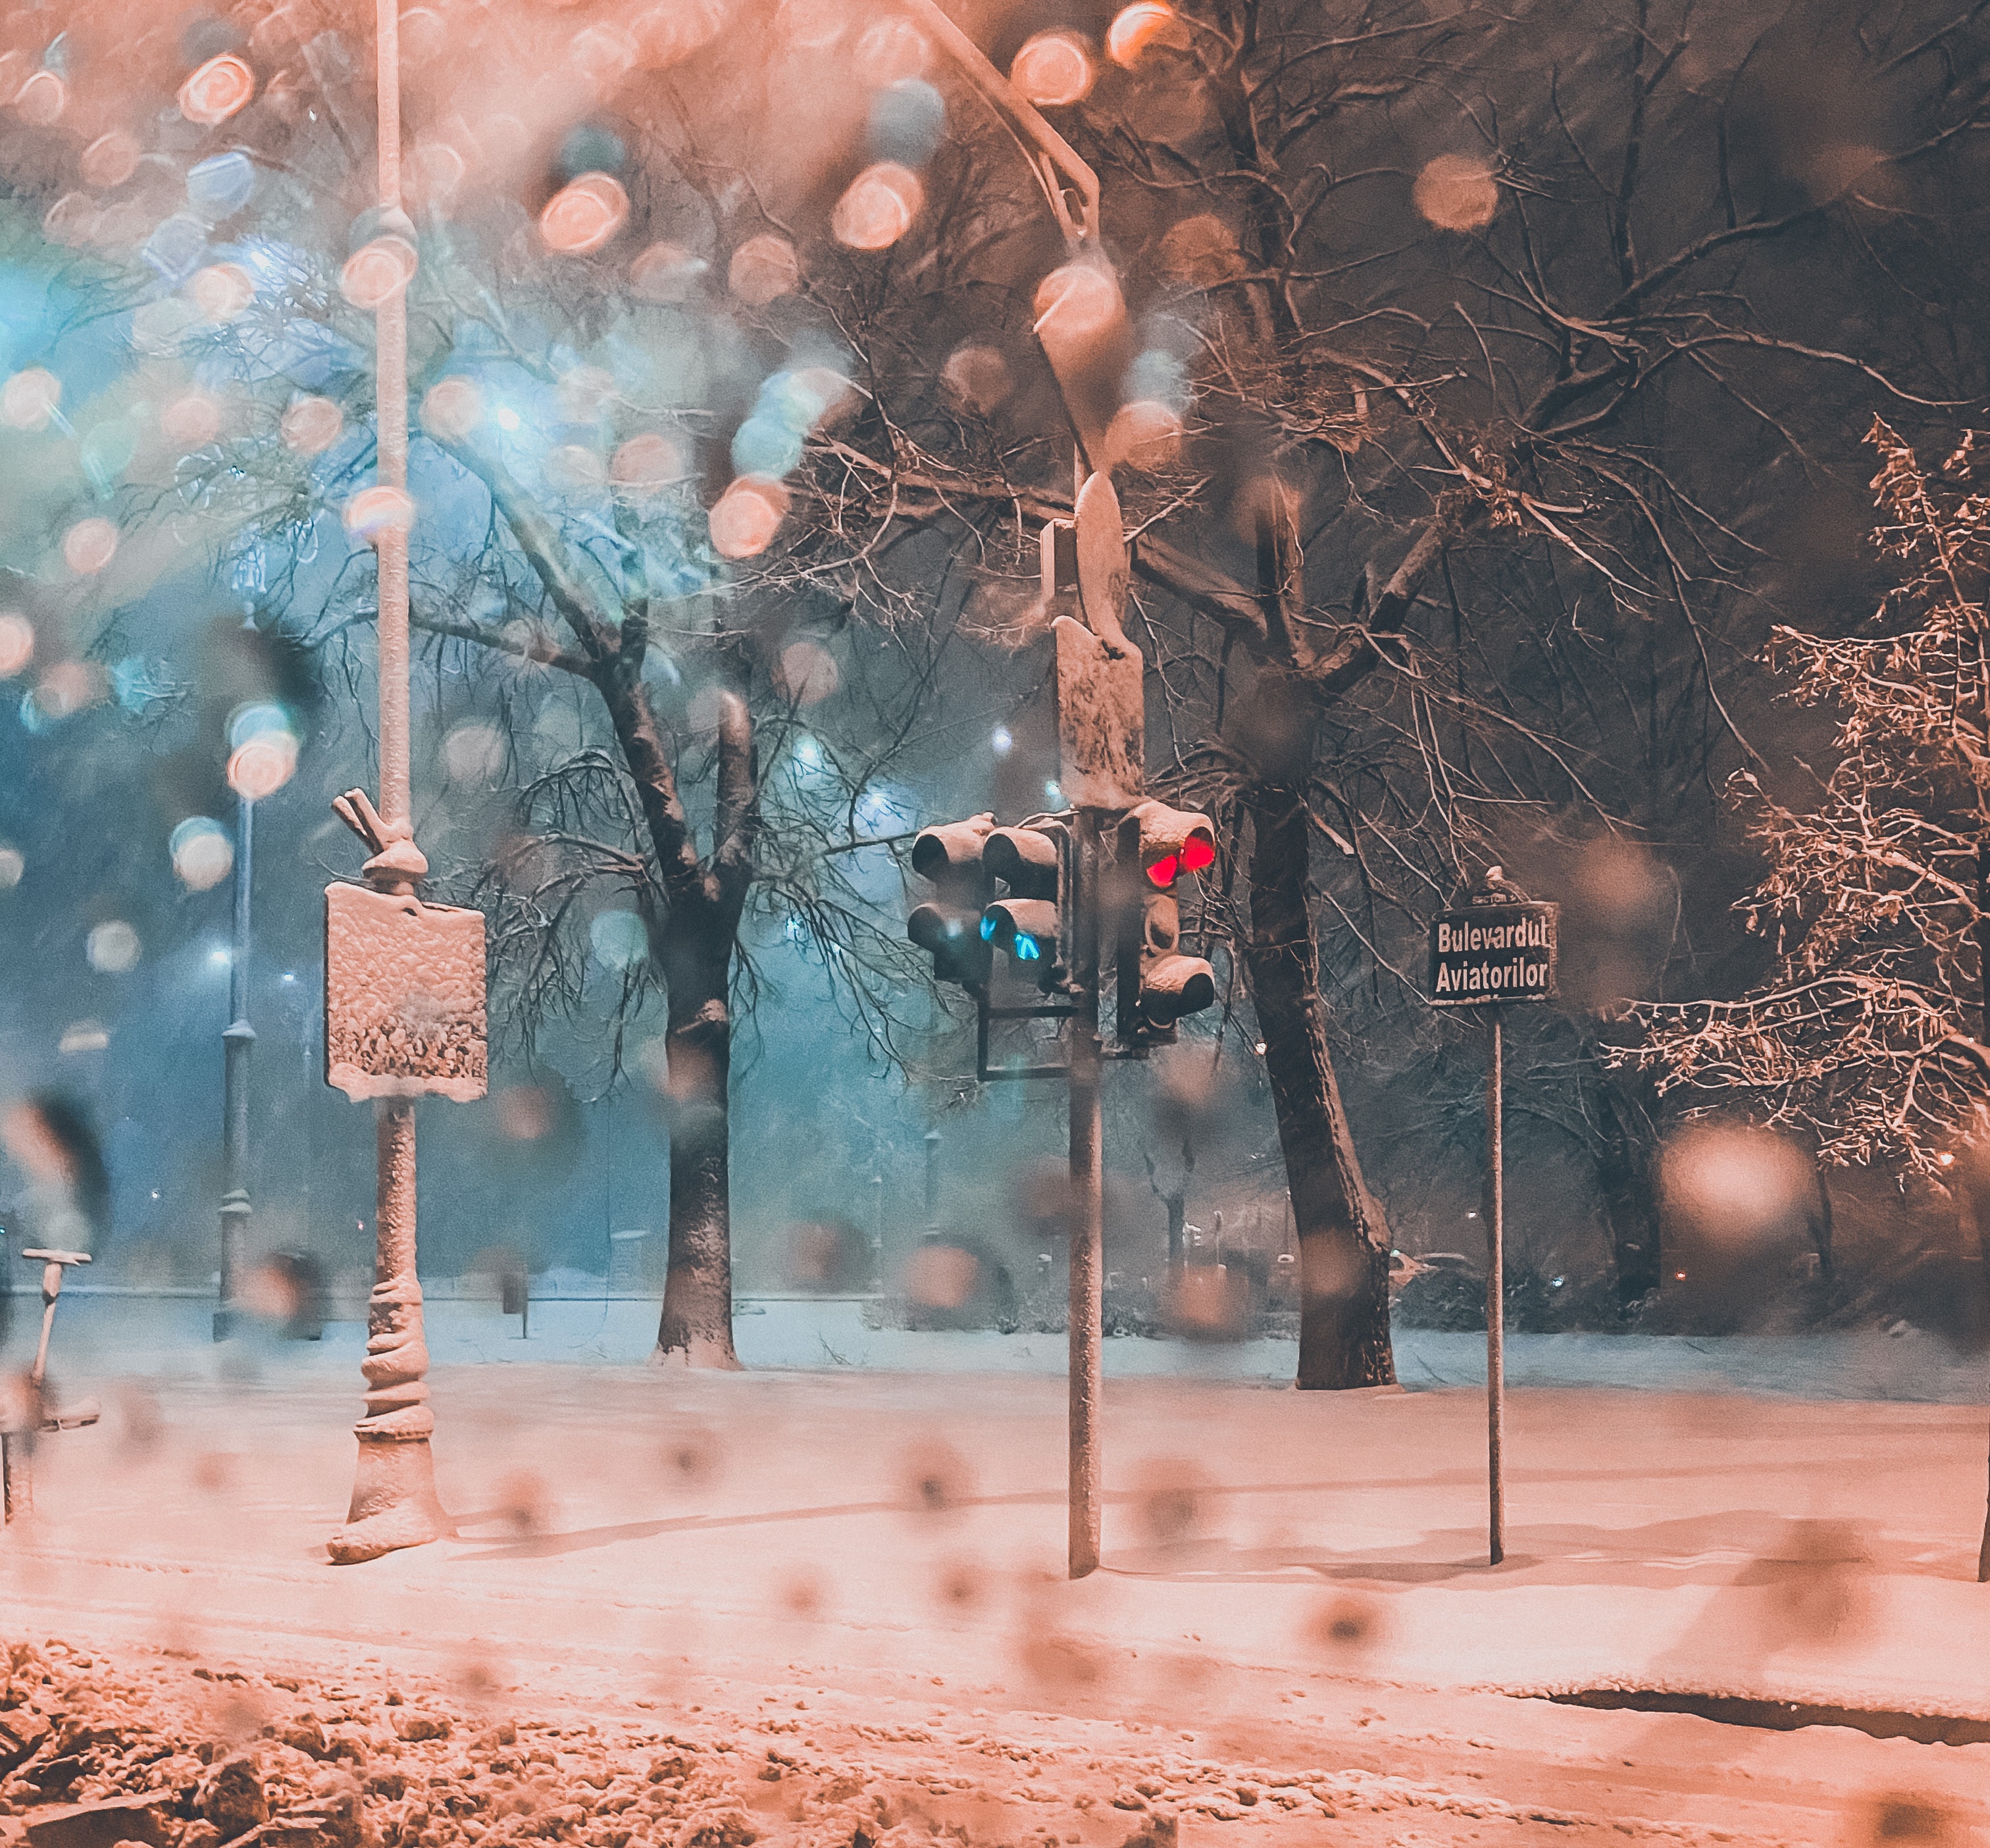 android winter, traffic light, snow, miscellanea, miscellaneous, street, snowstorm